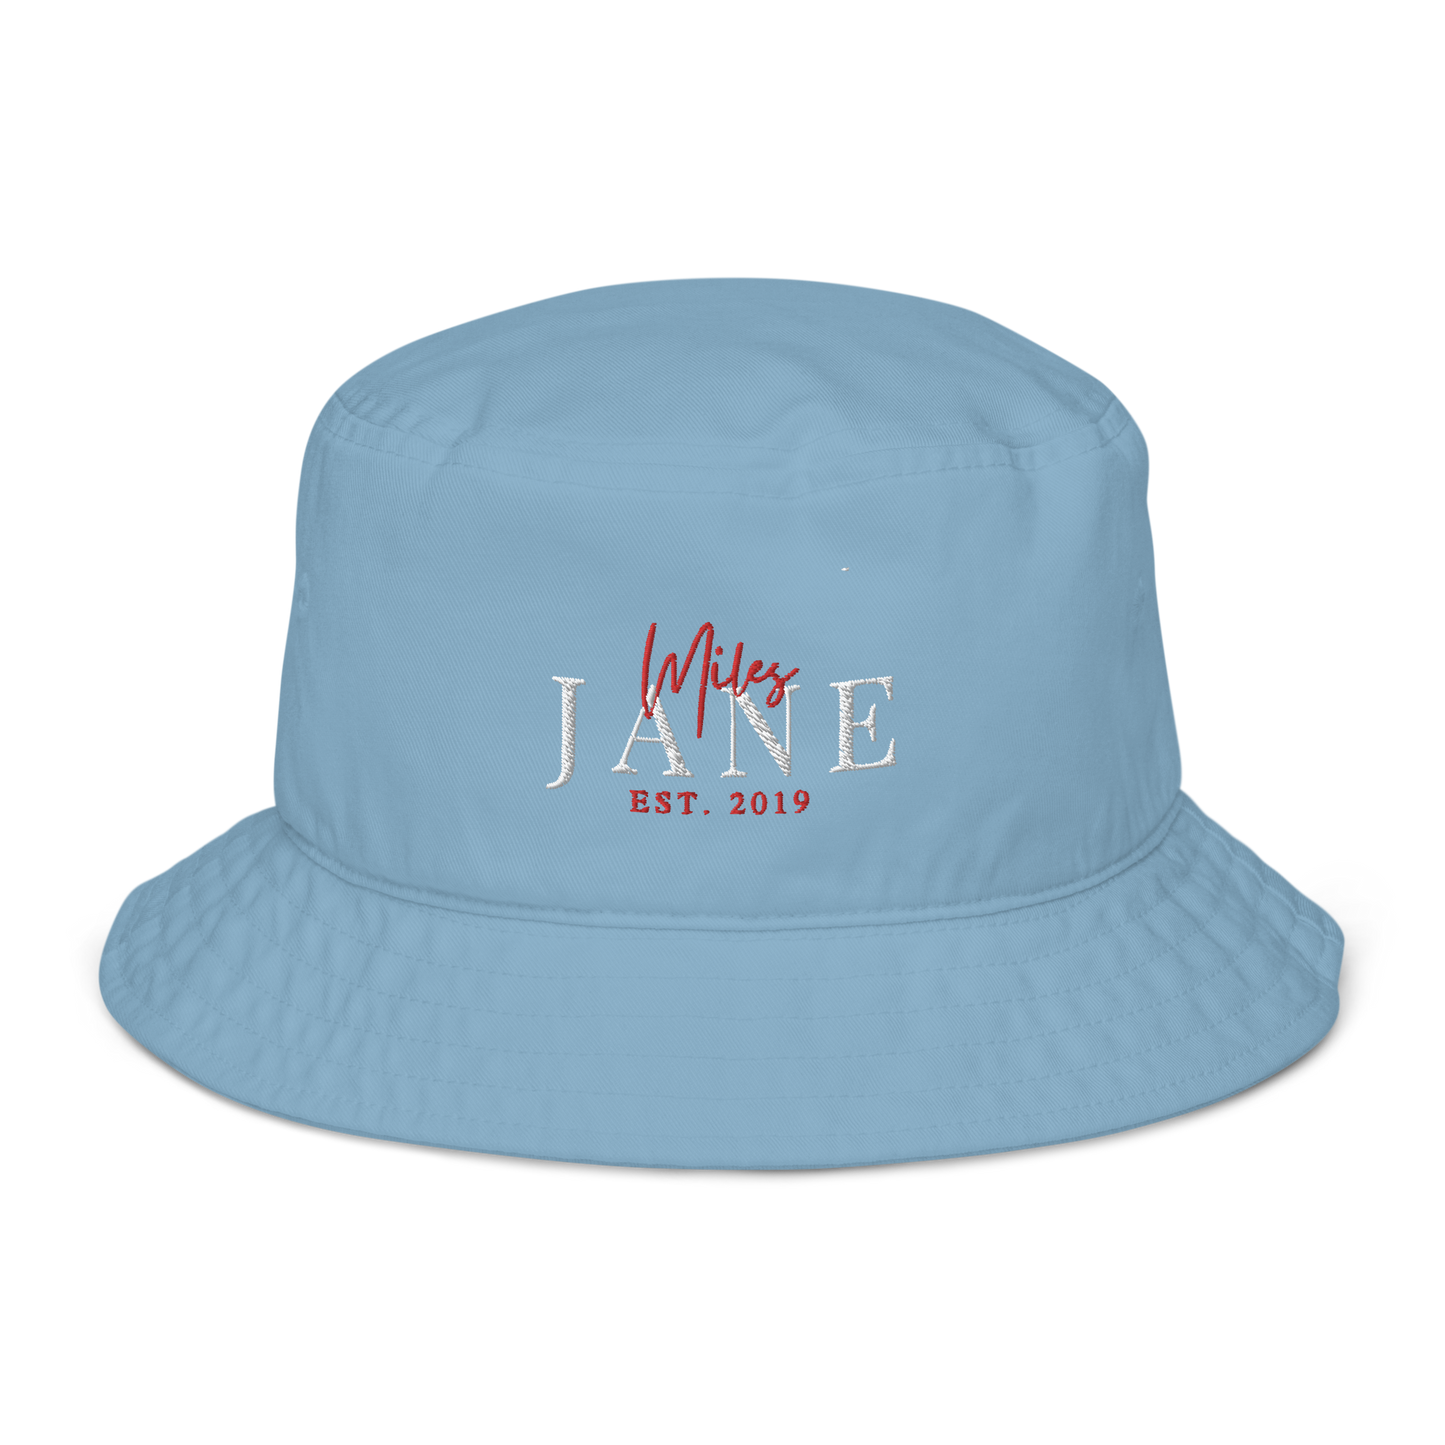 MilesJane Est 2019 - Organic Bucket Hat - MJC014